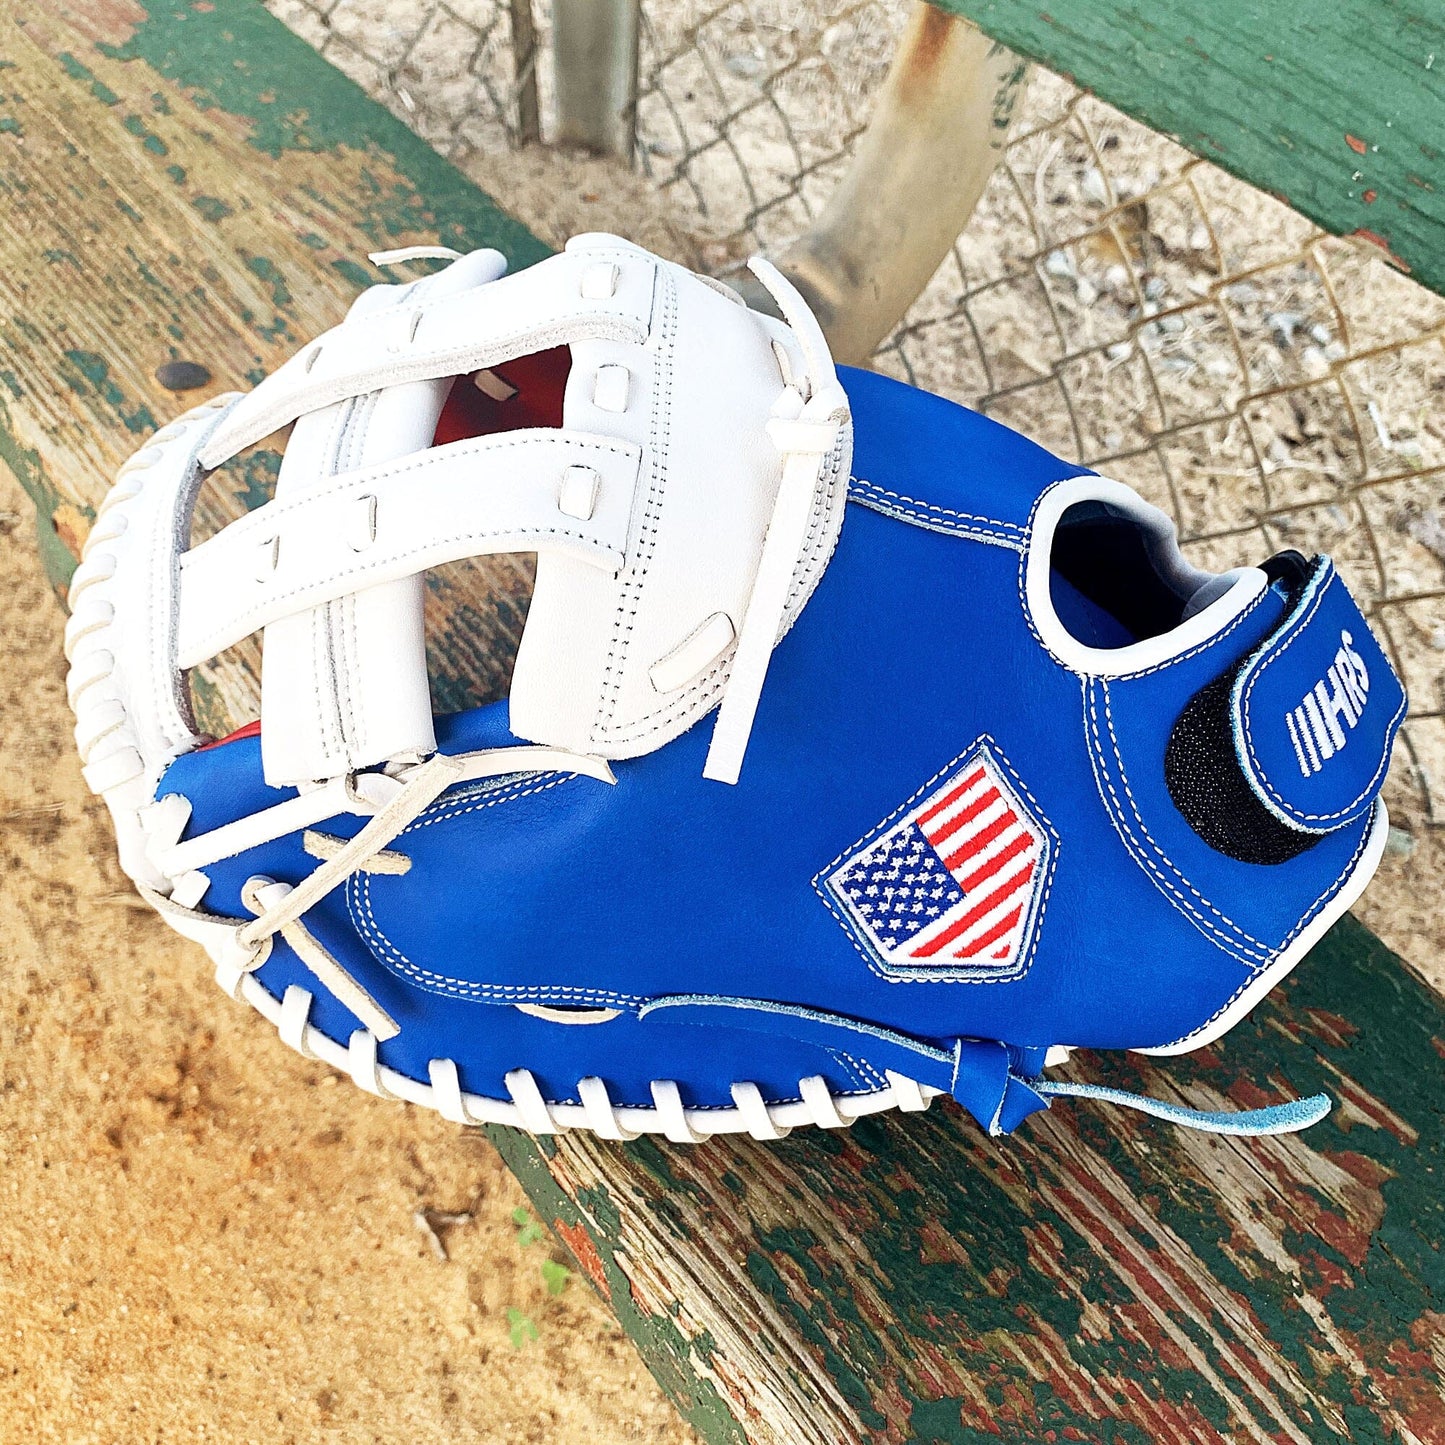 34" Softball Catcher's Mitt - Red / White / Blue